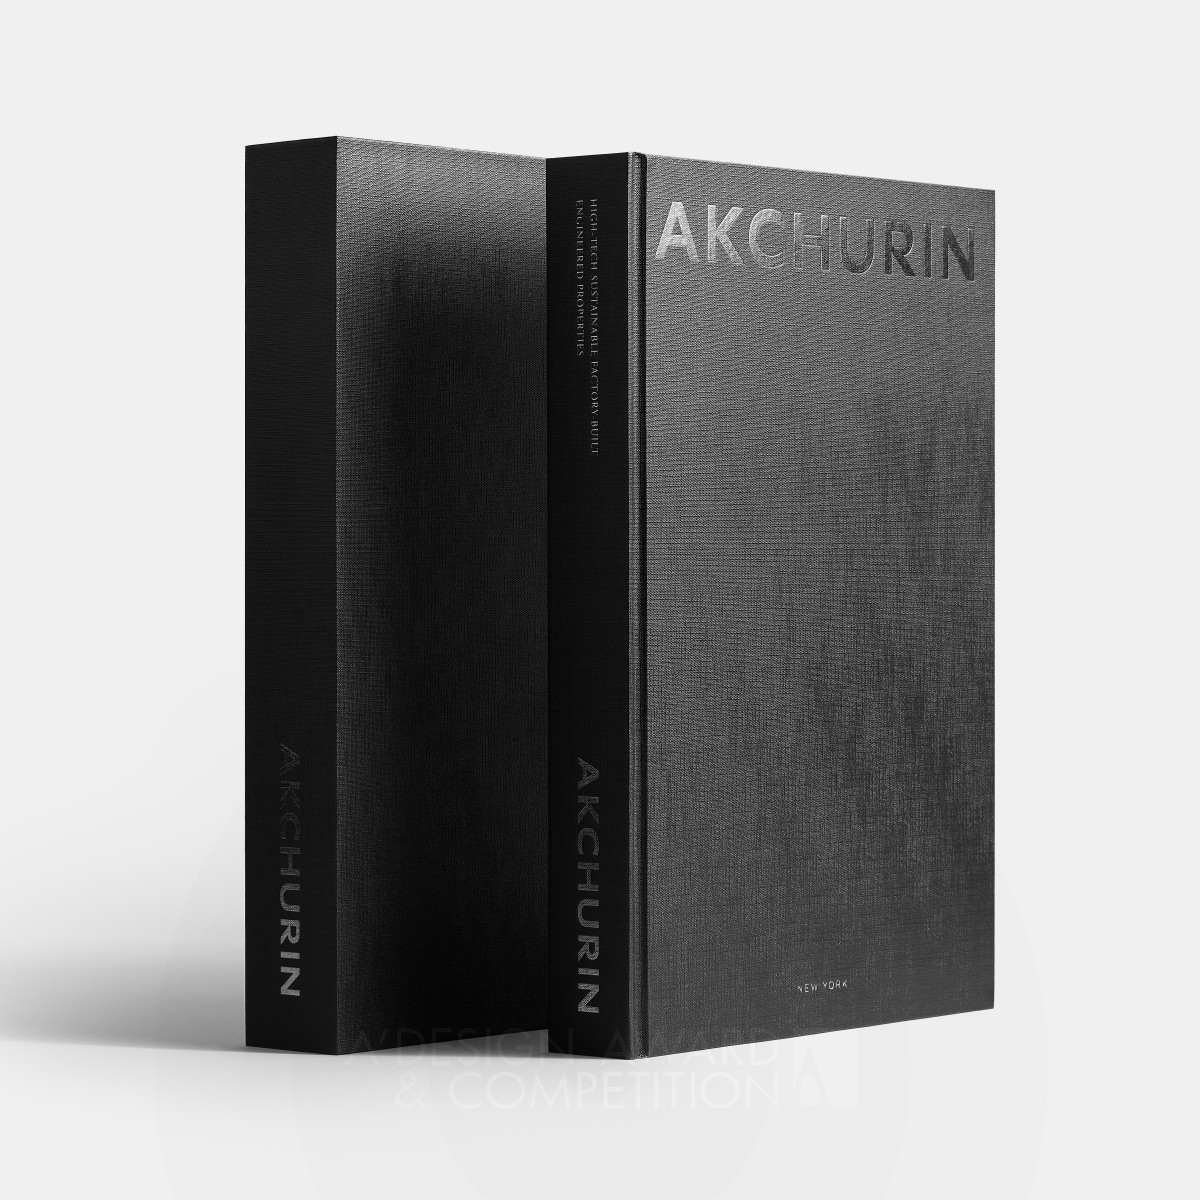 Akchurin New York Hardcover Book by Chingiz Akchurin Golden Limited Edition and Custom Design Award Winner 2021 